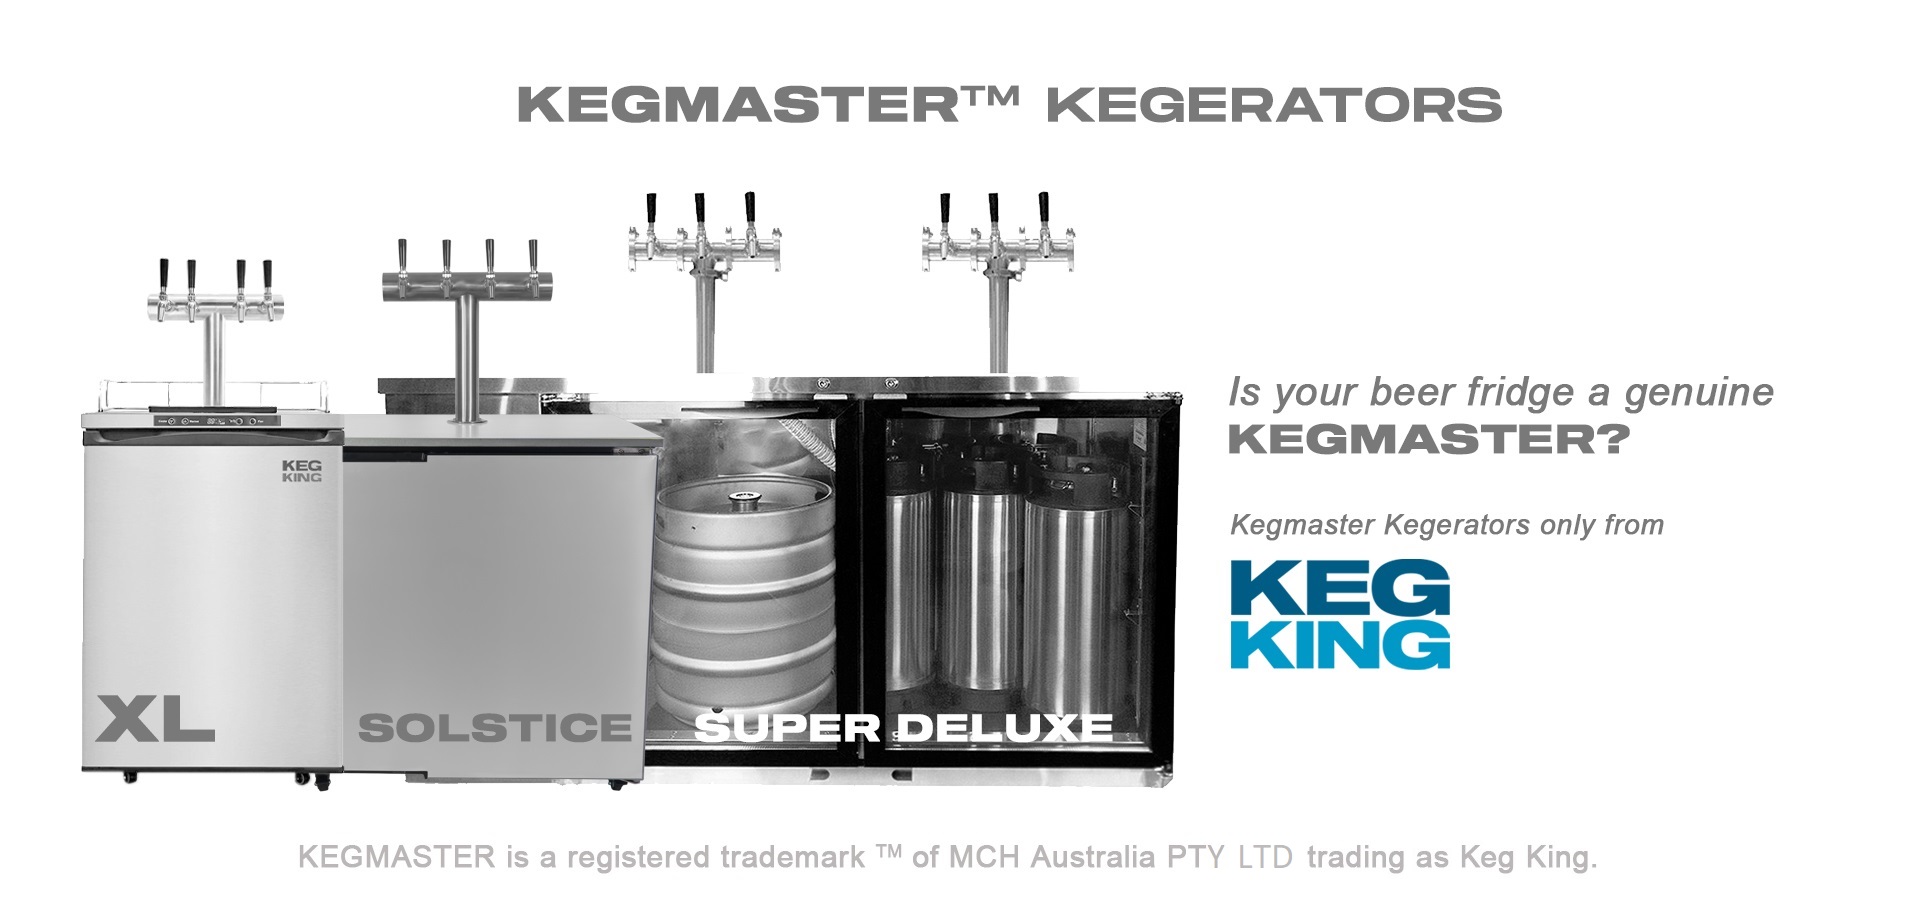 Kegerators, Original Kegerator, history of kegs, Kegmaster